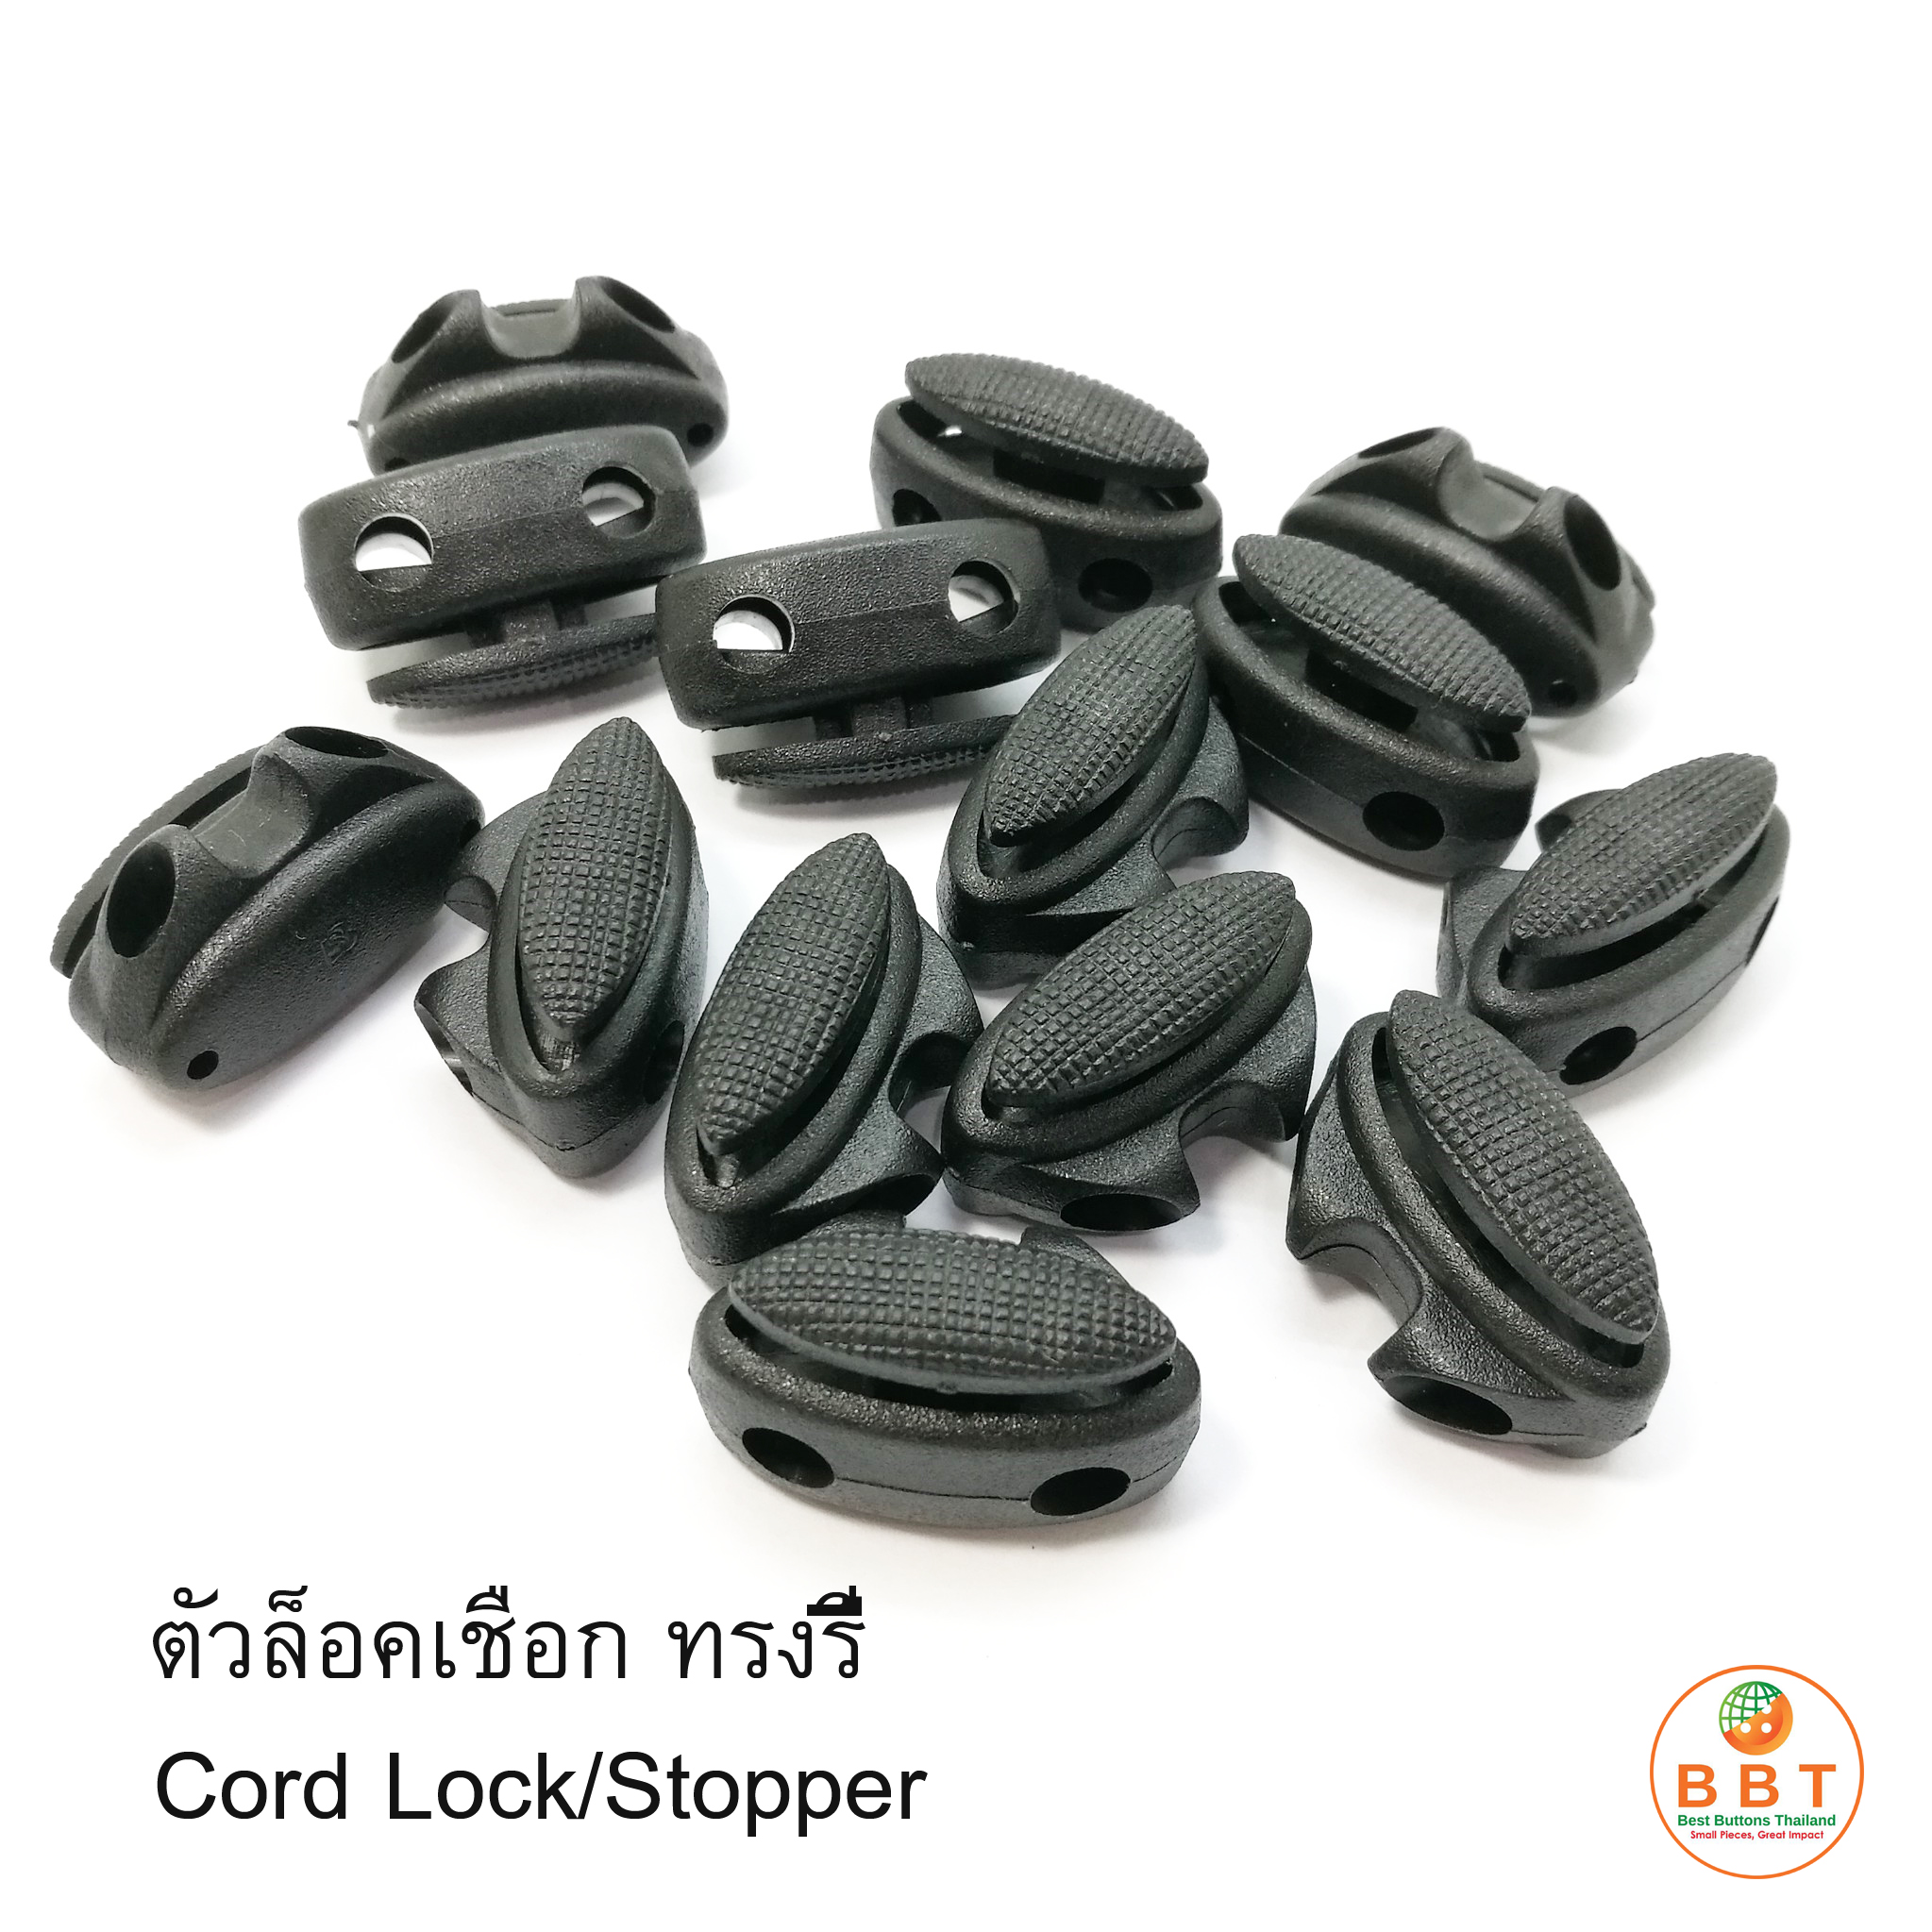 Cord Lock/Stopper